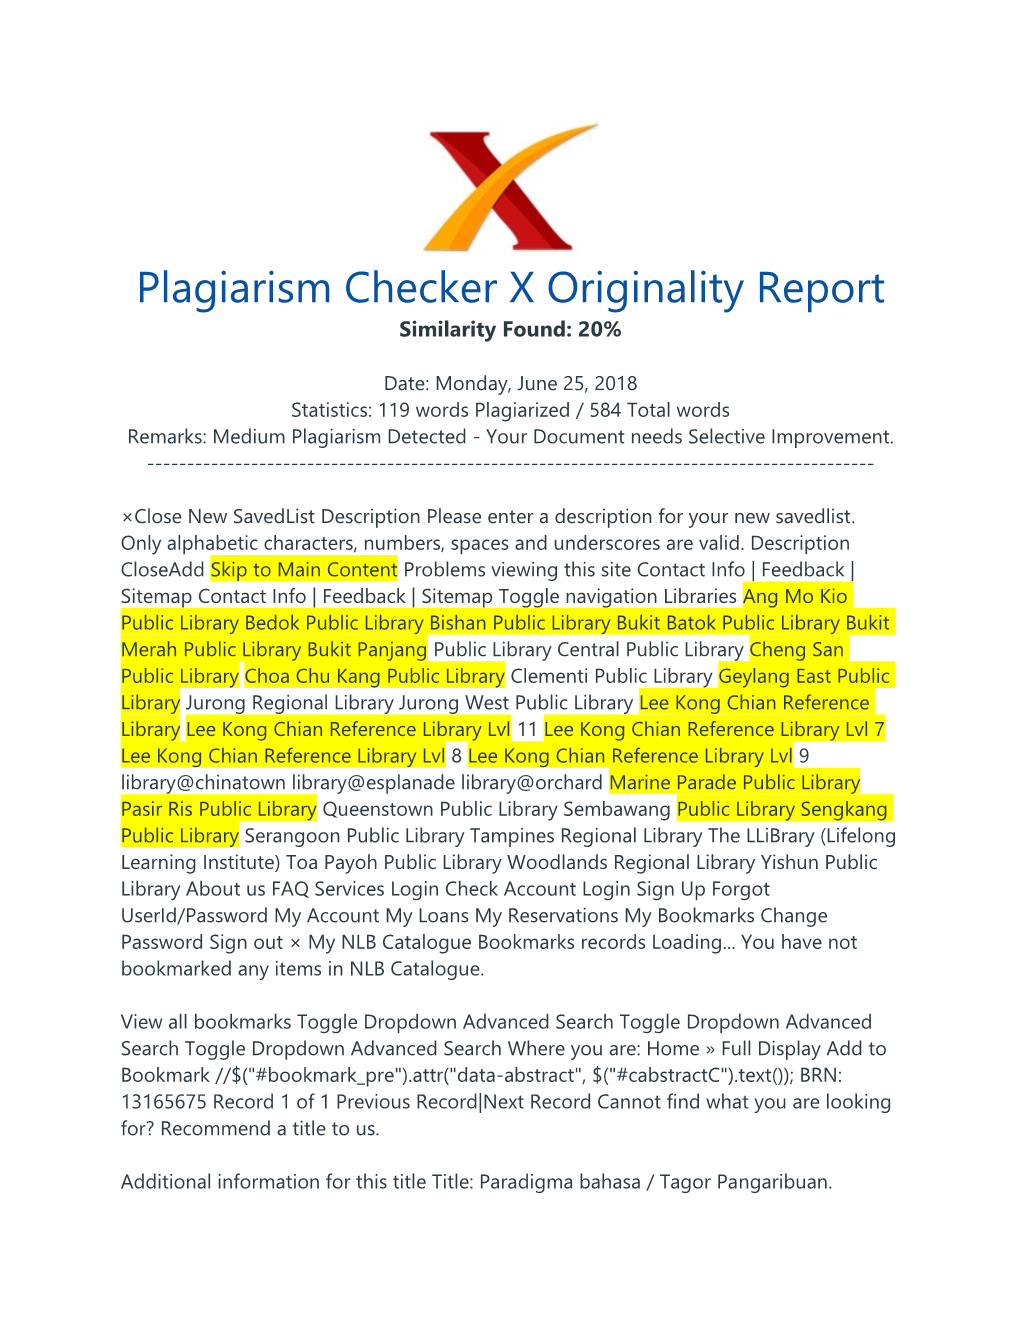 Plagiarism Checker X Originality Report Similarity Found: 20%